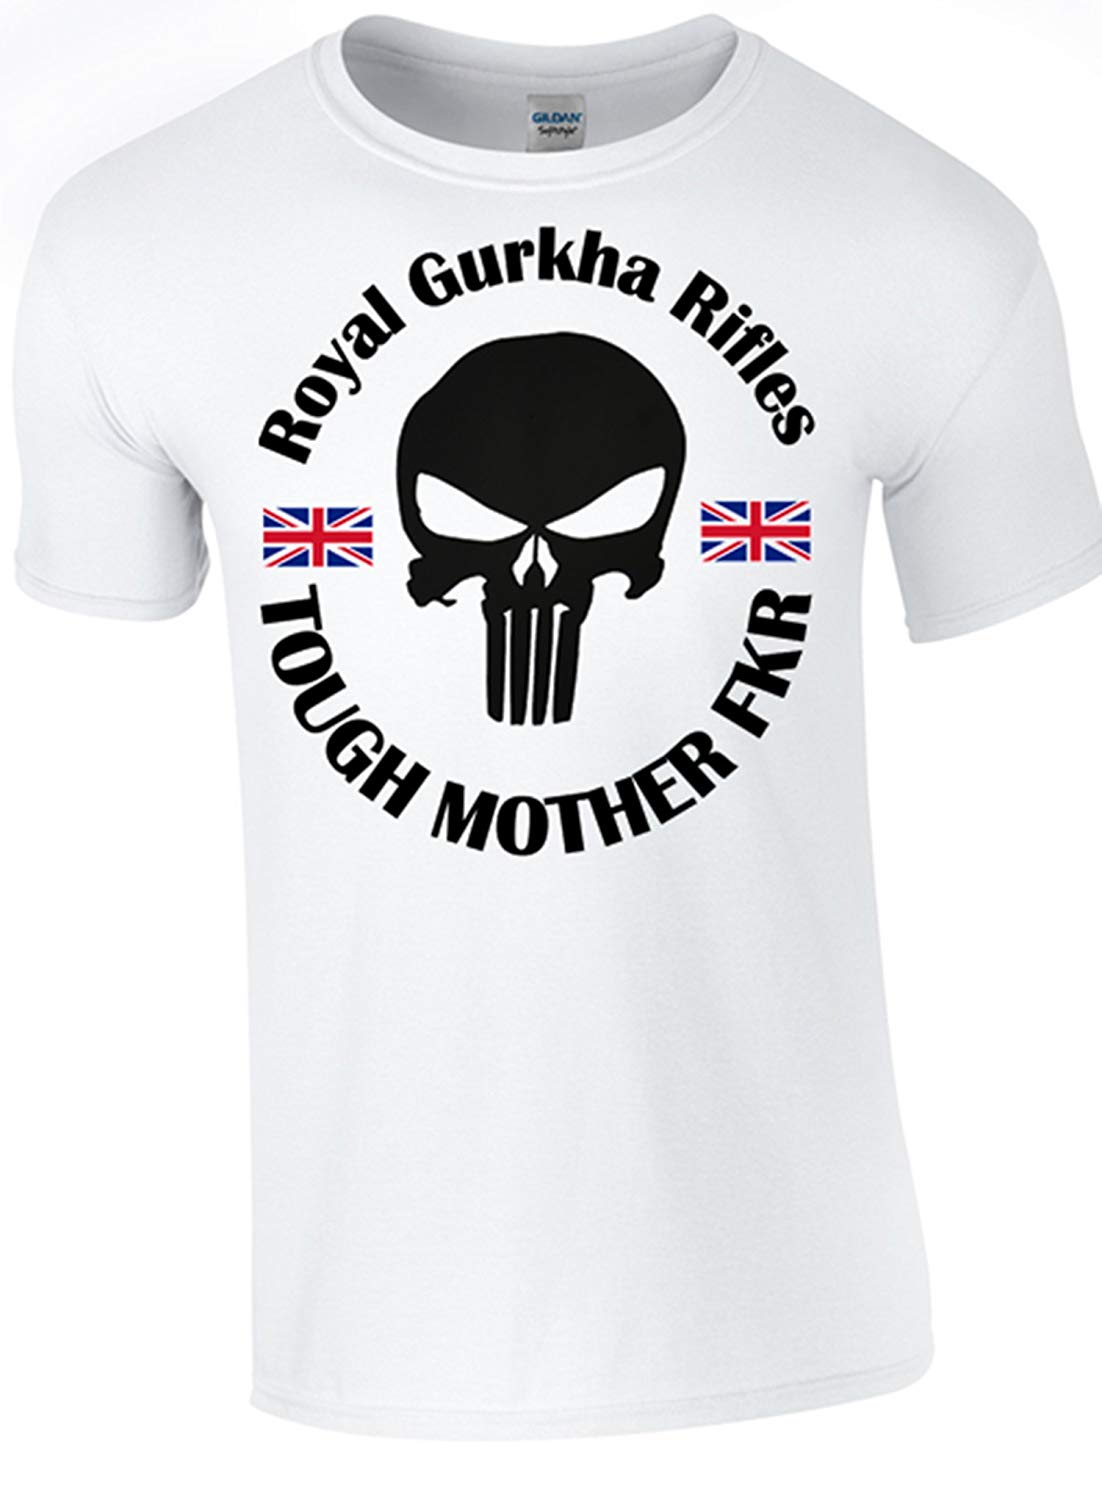 Tough Mother FKR - Gurkha T-Shirt - Army 1157 Kit  Veterans Owned Business